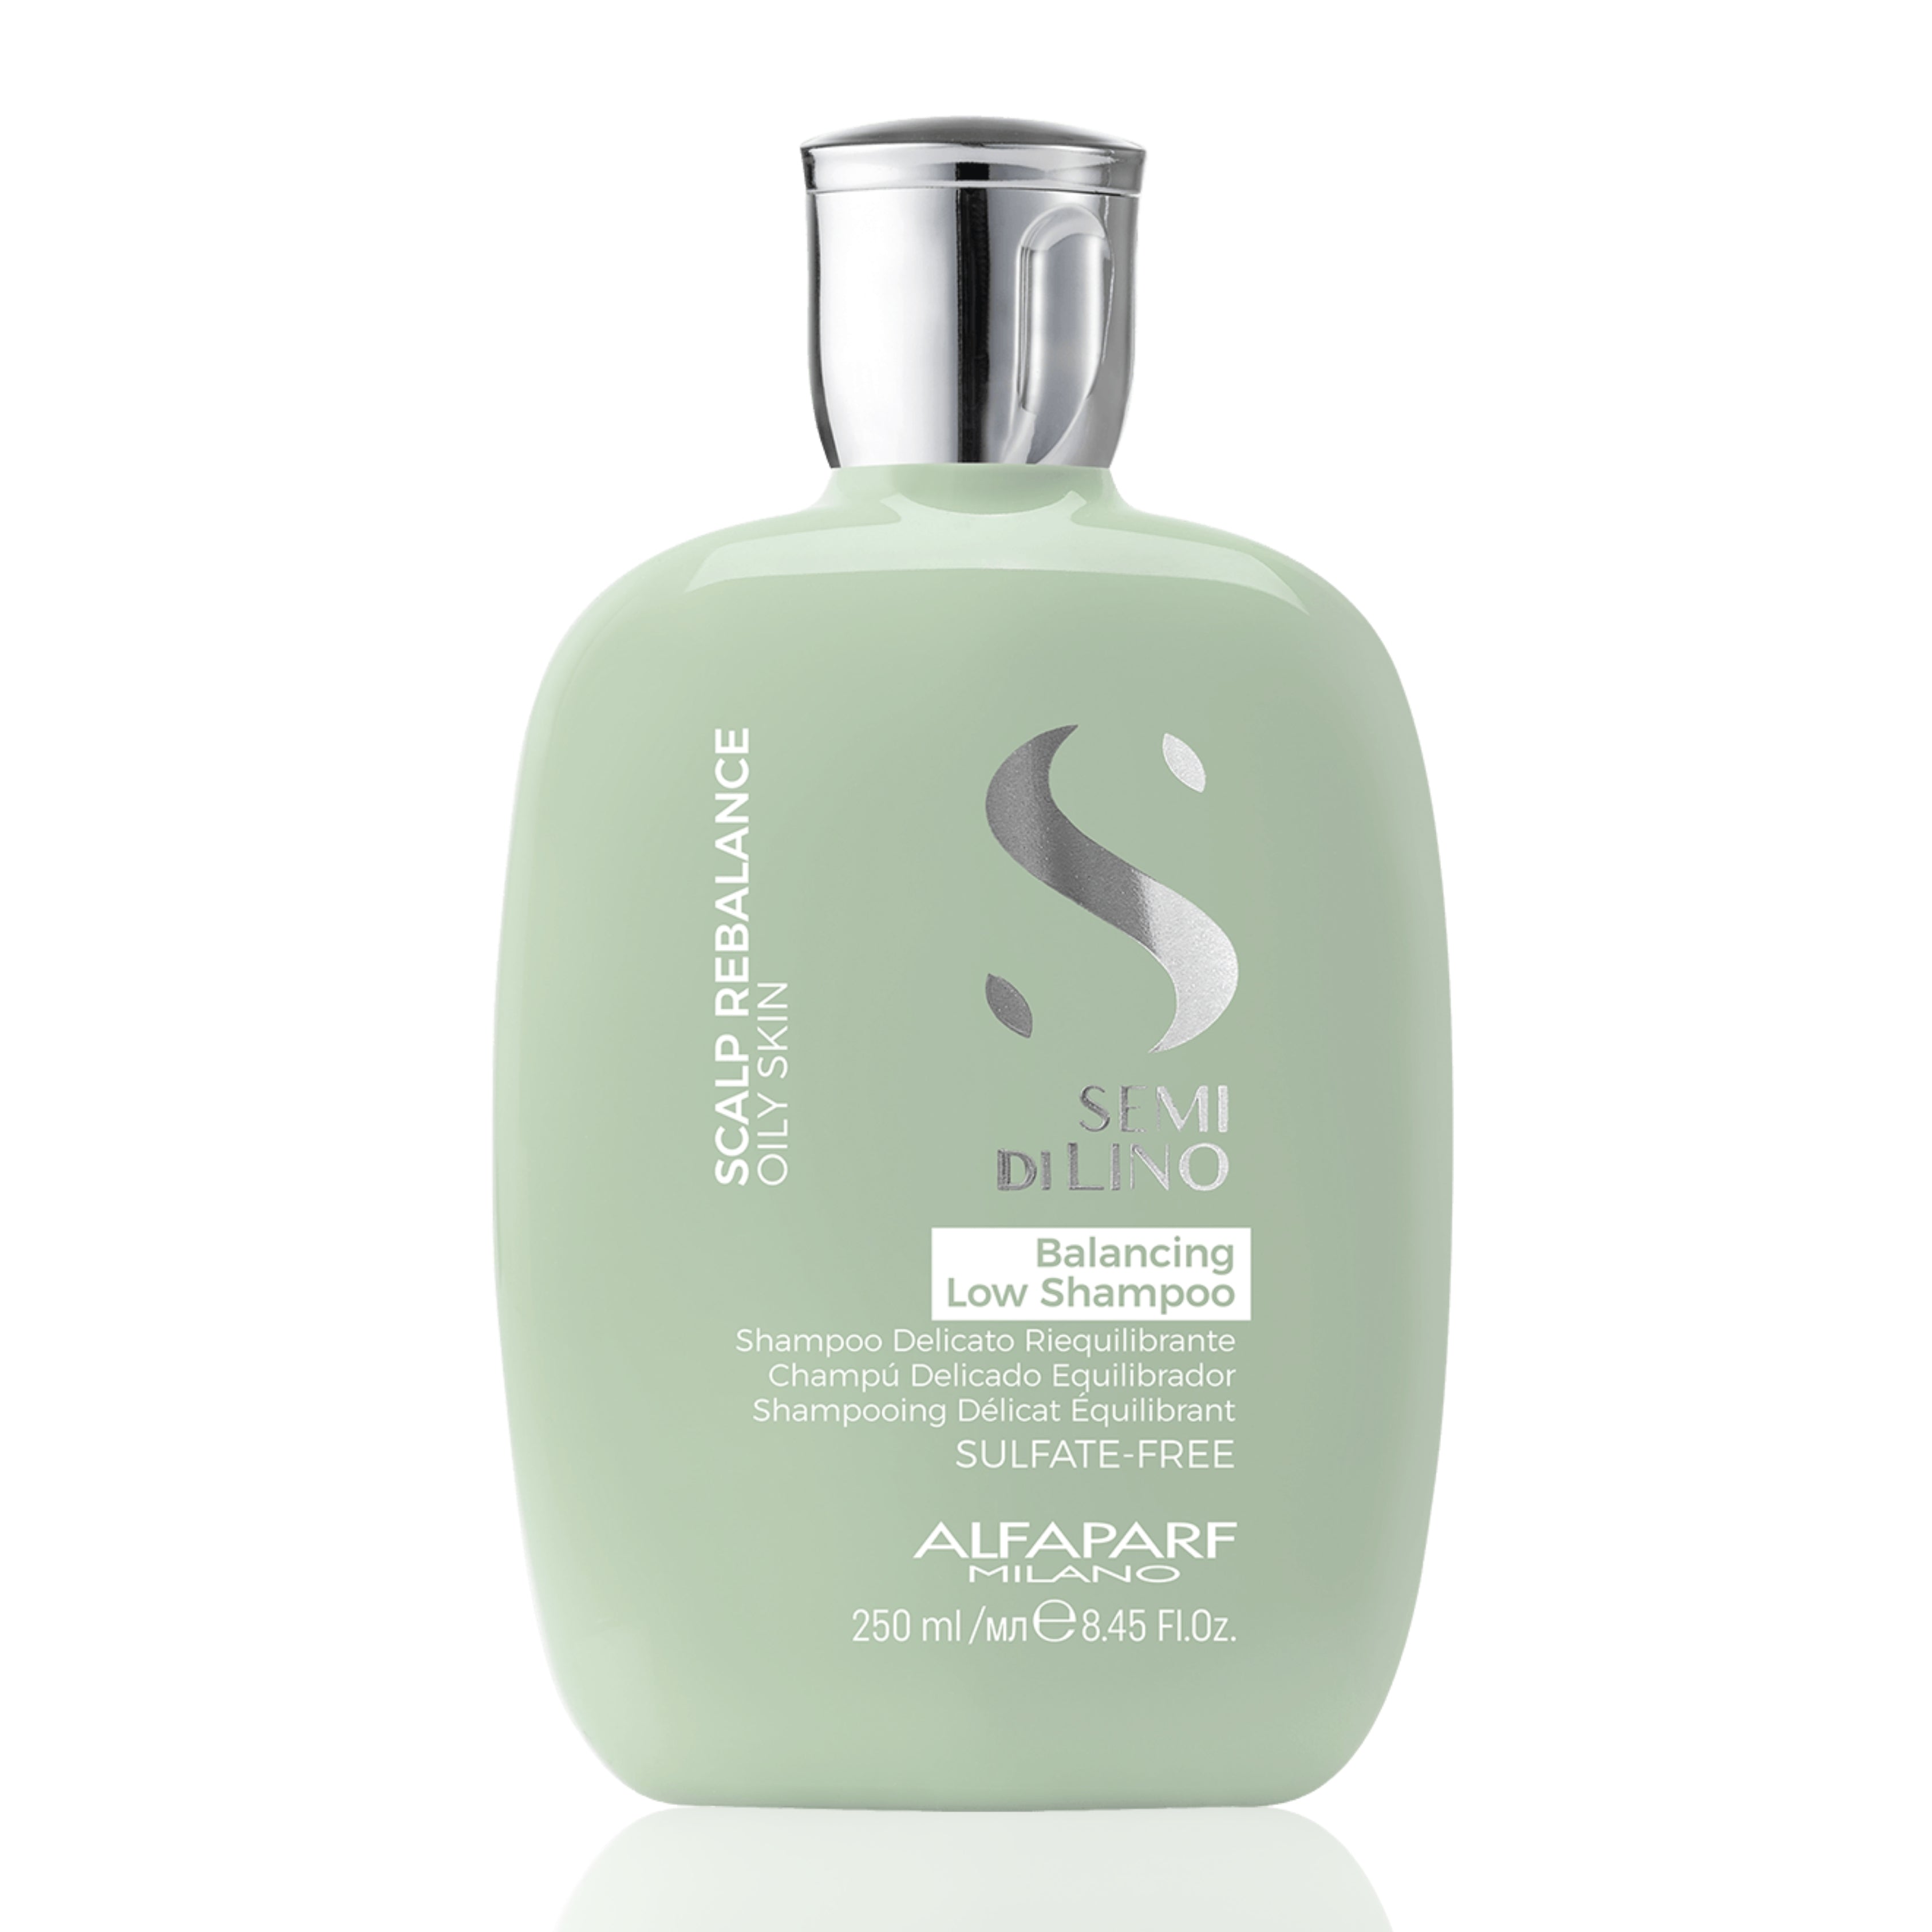 ALFAPARF MILANO SEMI DI LINO Balancing Low Shampoo 250ML